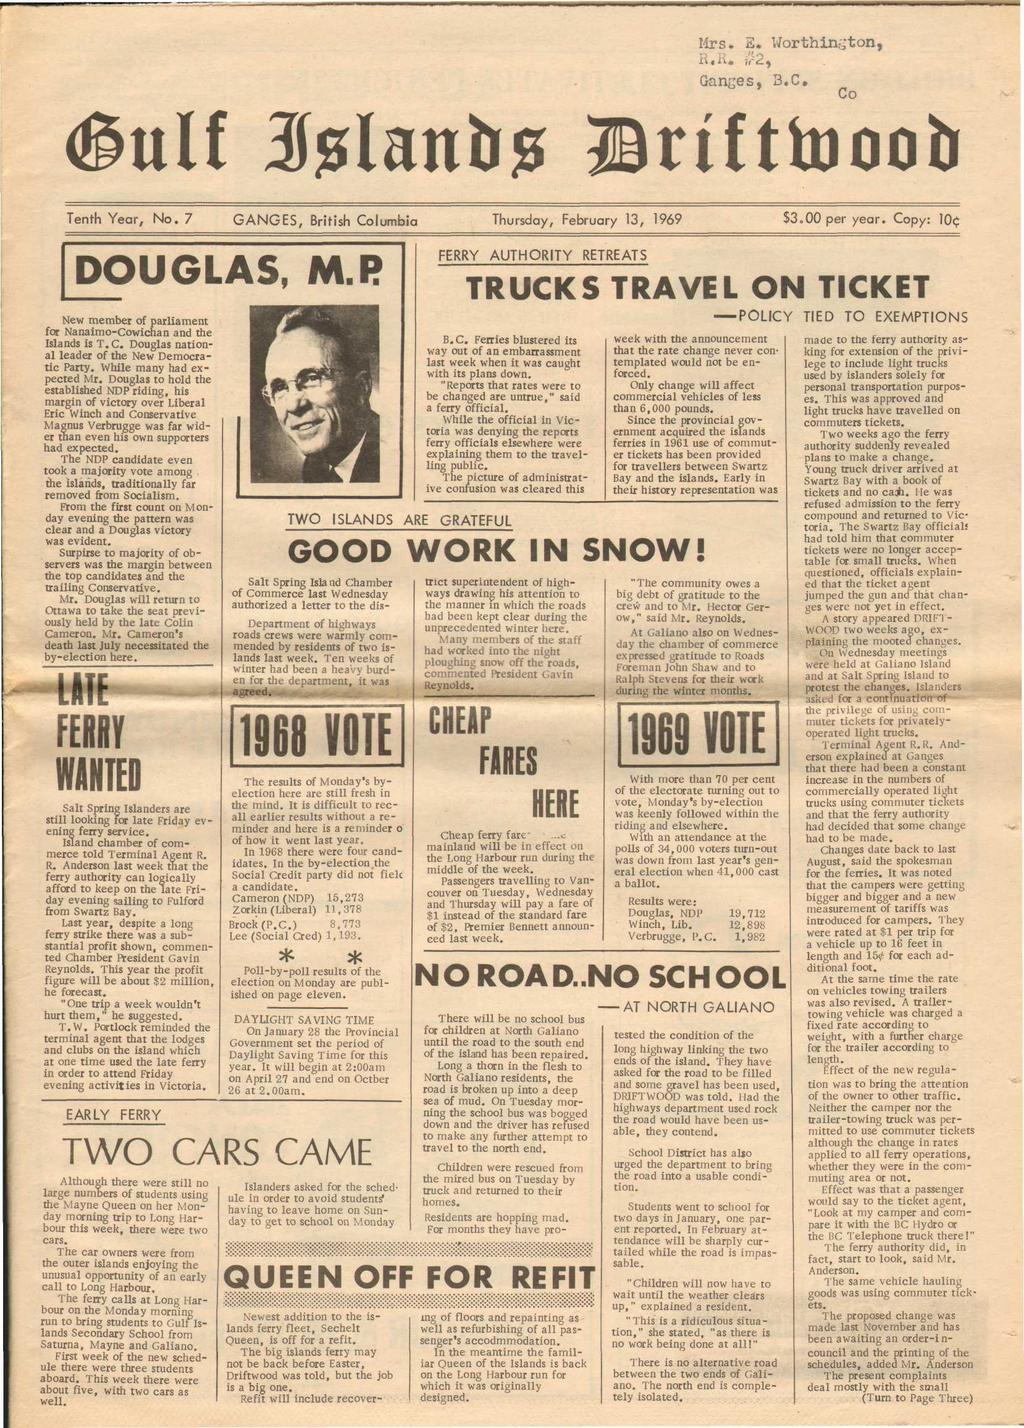 Mrs» E. Worthin^ton, T> "- o Ganges, 'B.C., Co rtftluoob Tenth Year, No. 7 GANGES, British Columbia Thursday, February 13, 1969 $3oOO per year. Copy: 10<: DOUGLAS, M.